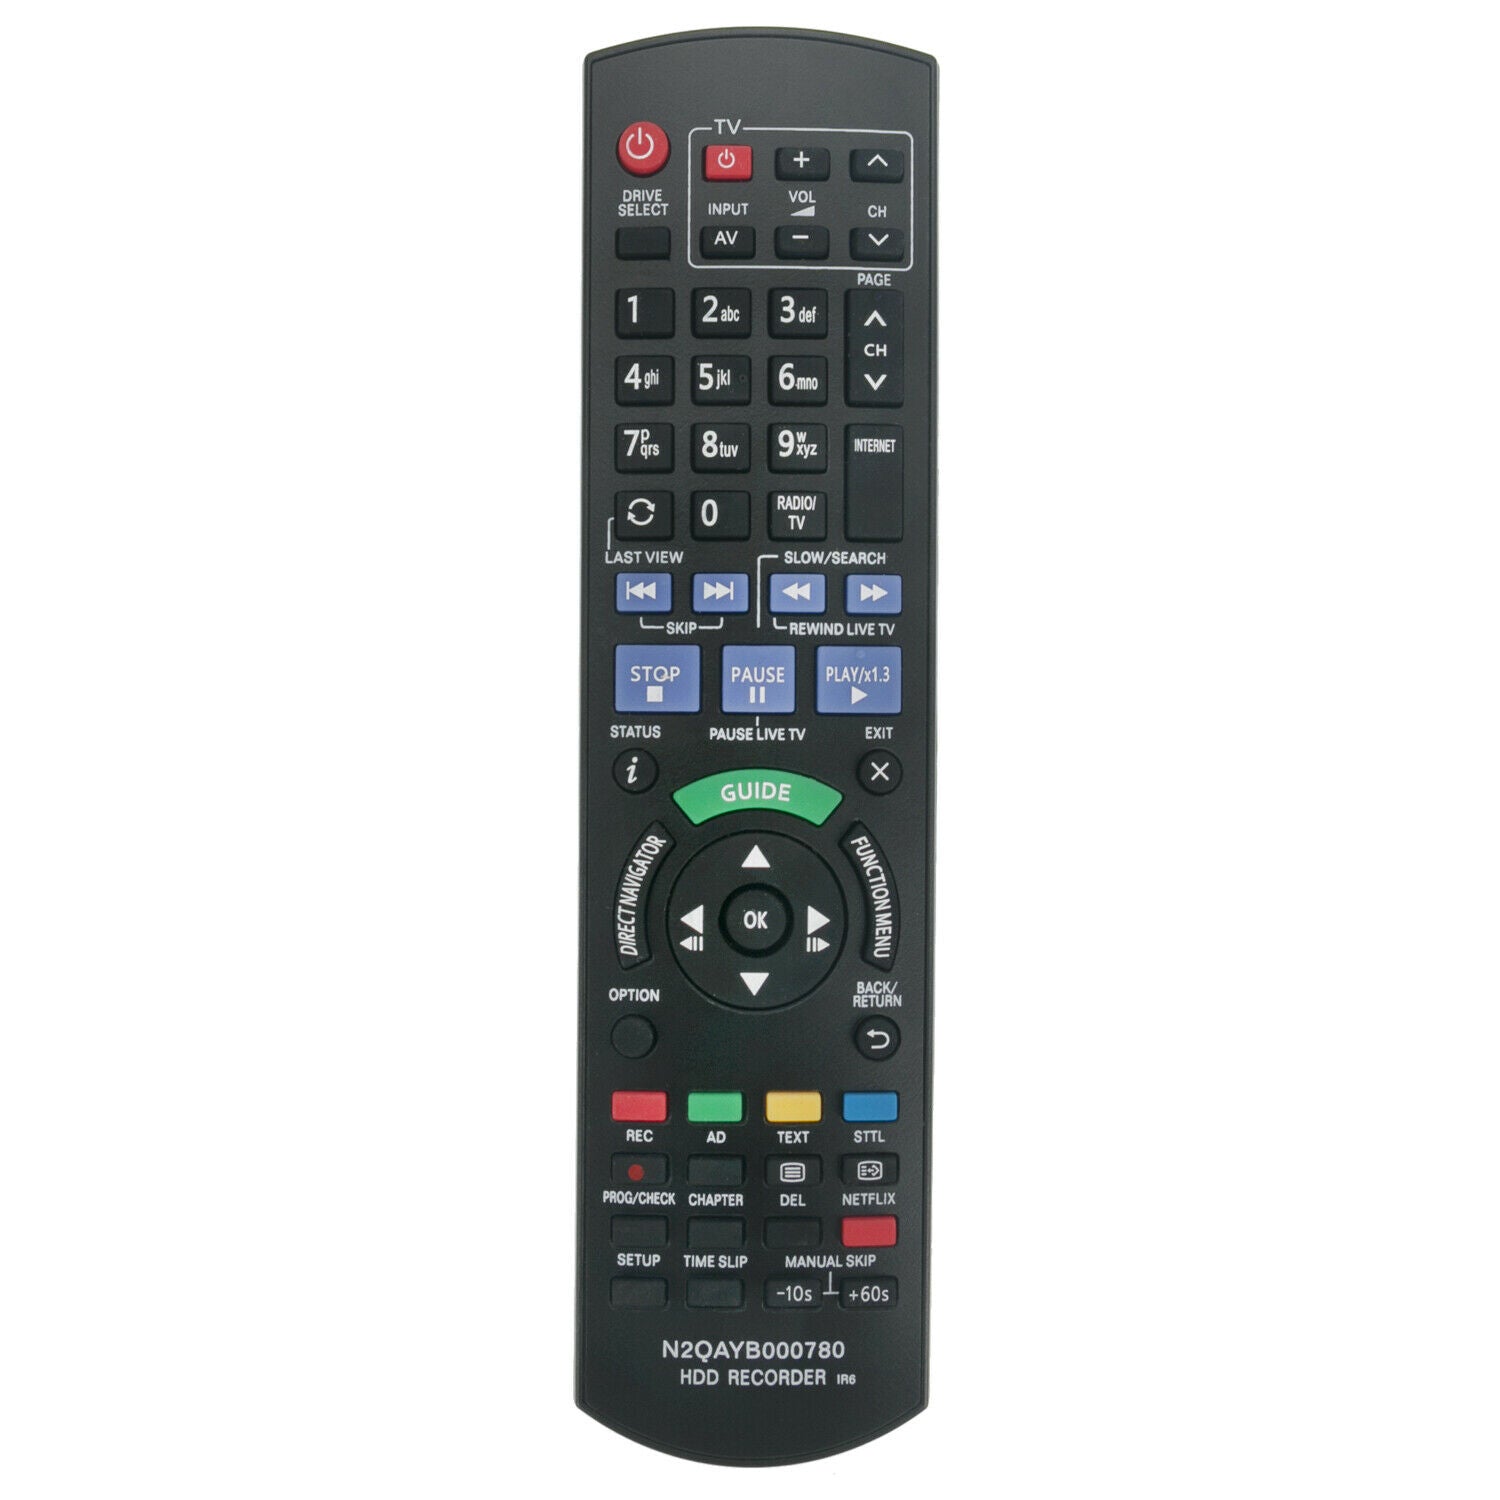 N2QAYB000780 Replacement Remote Control for Panasonic HDD Recorder DMR-HWT230EB DMR-HW120EBK